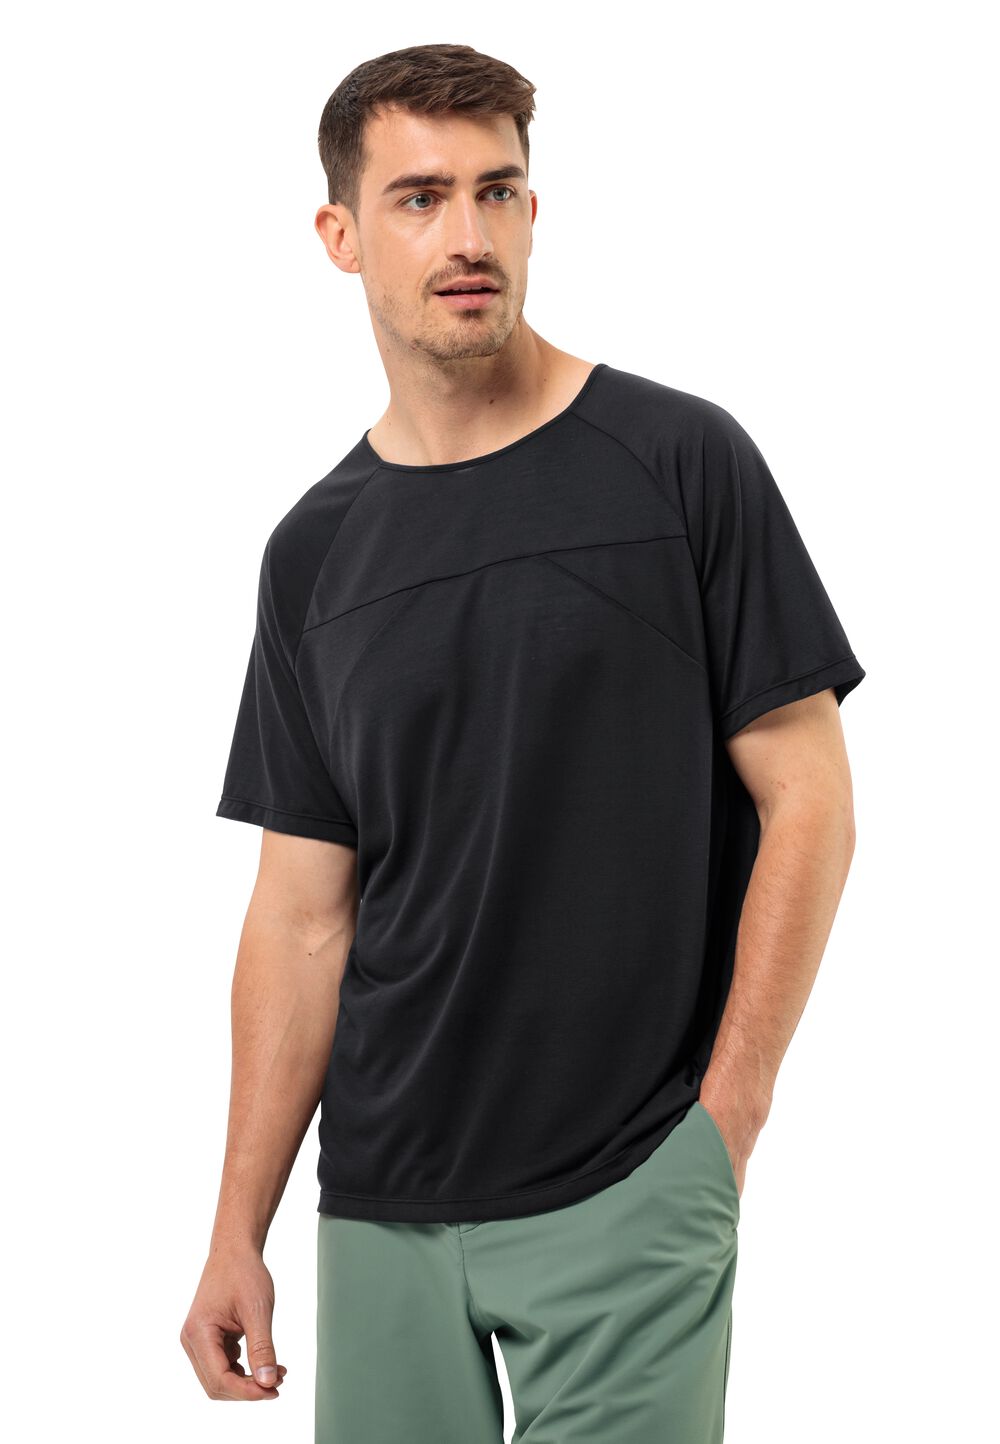 Jack Wolfskin Wanderword T-Shirt Men Functioneel shirt Heren M zwart granite black